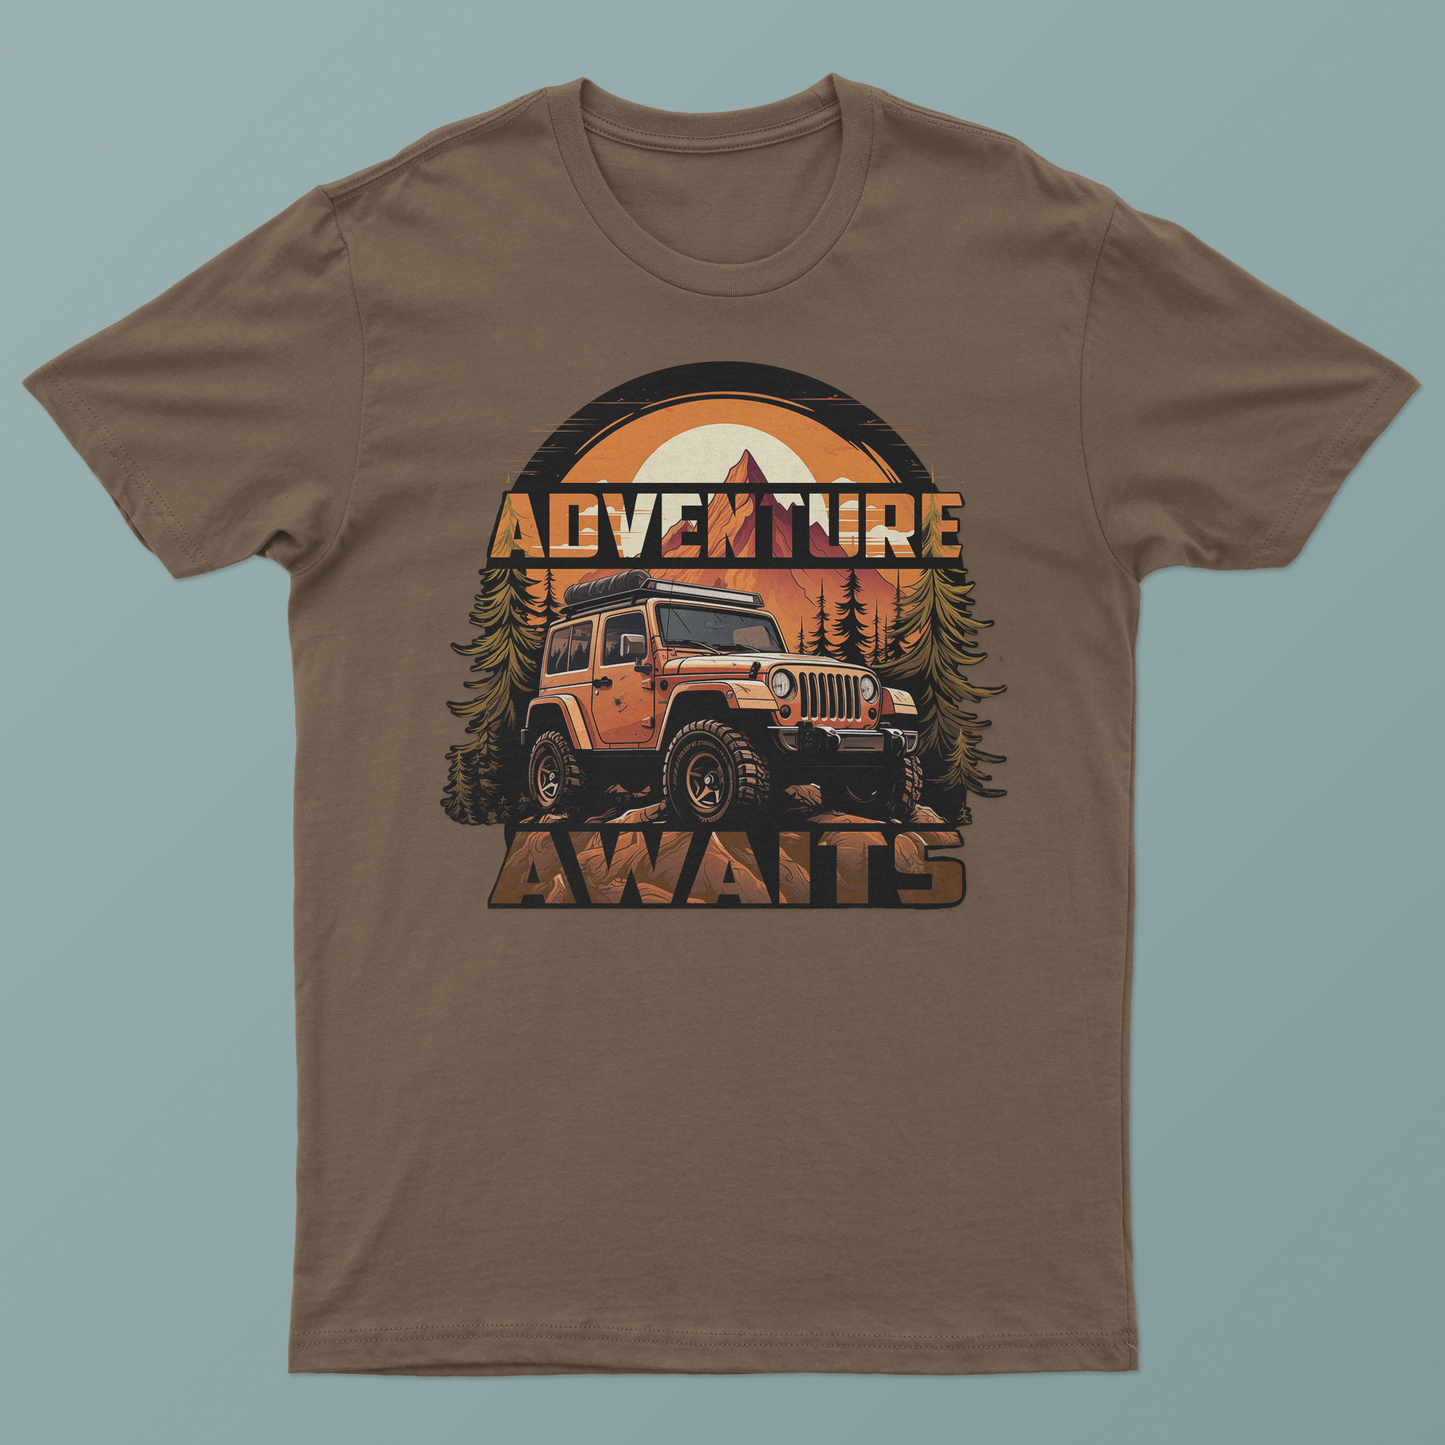 Adventure Awaits Unisex Graphic Tee - Outdoor Explorer T-Shirt